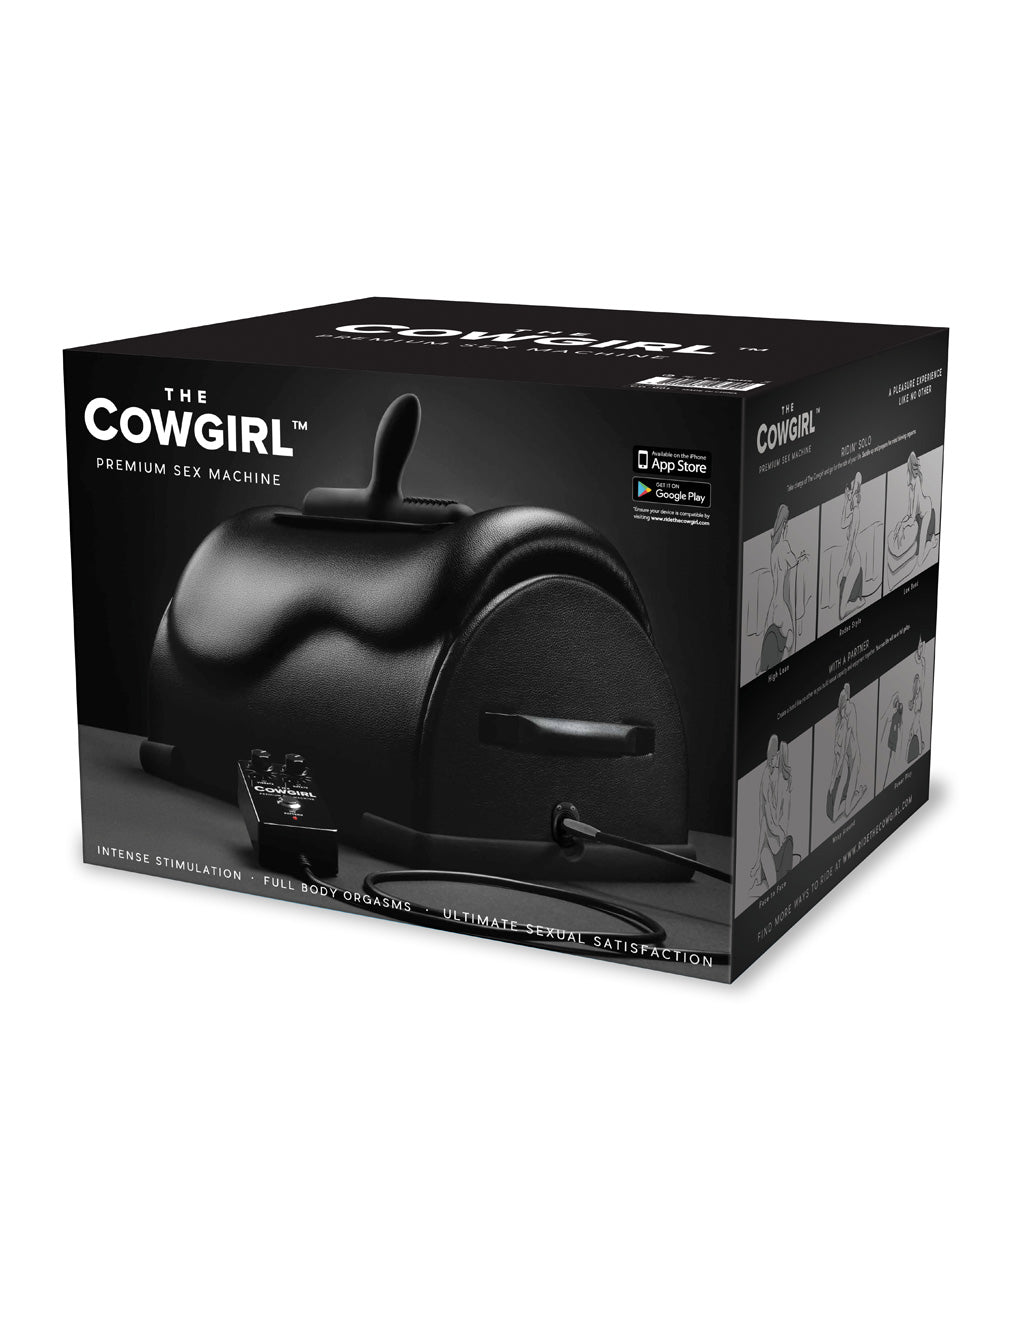 The Cowgirl Premium Sex Machine Packaging